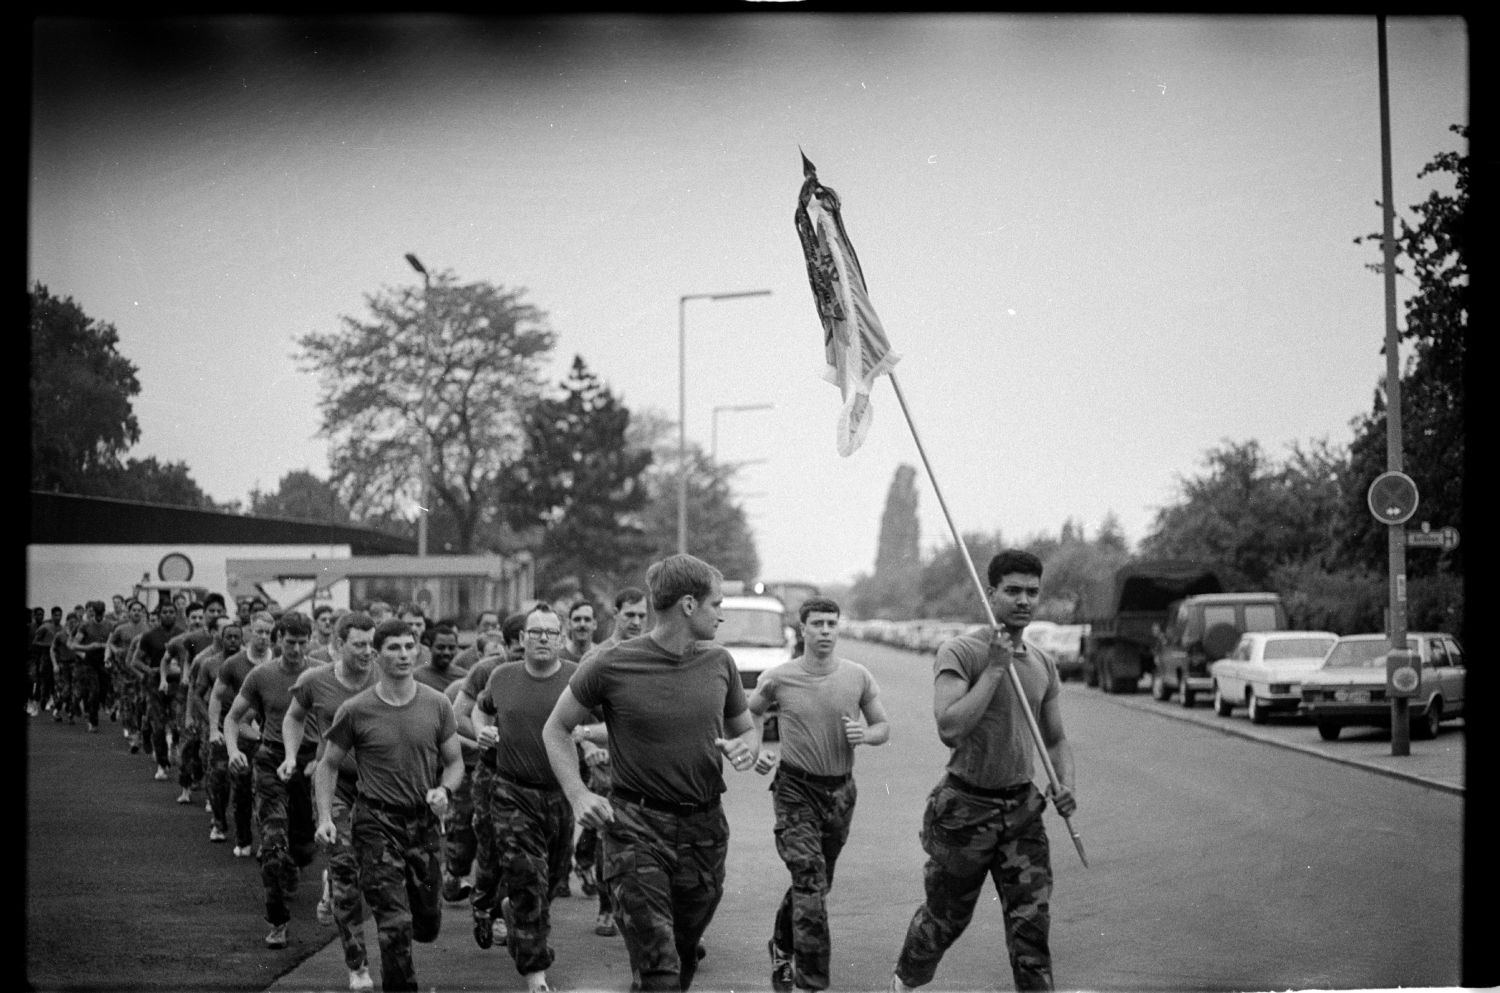 S/w-Fotografie: Brigade Run der U.S. Army Berlin Brigade in den McNair Barracks in Berlin-Lichterfelde